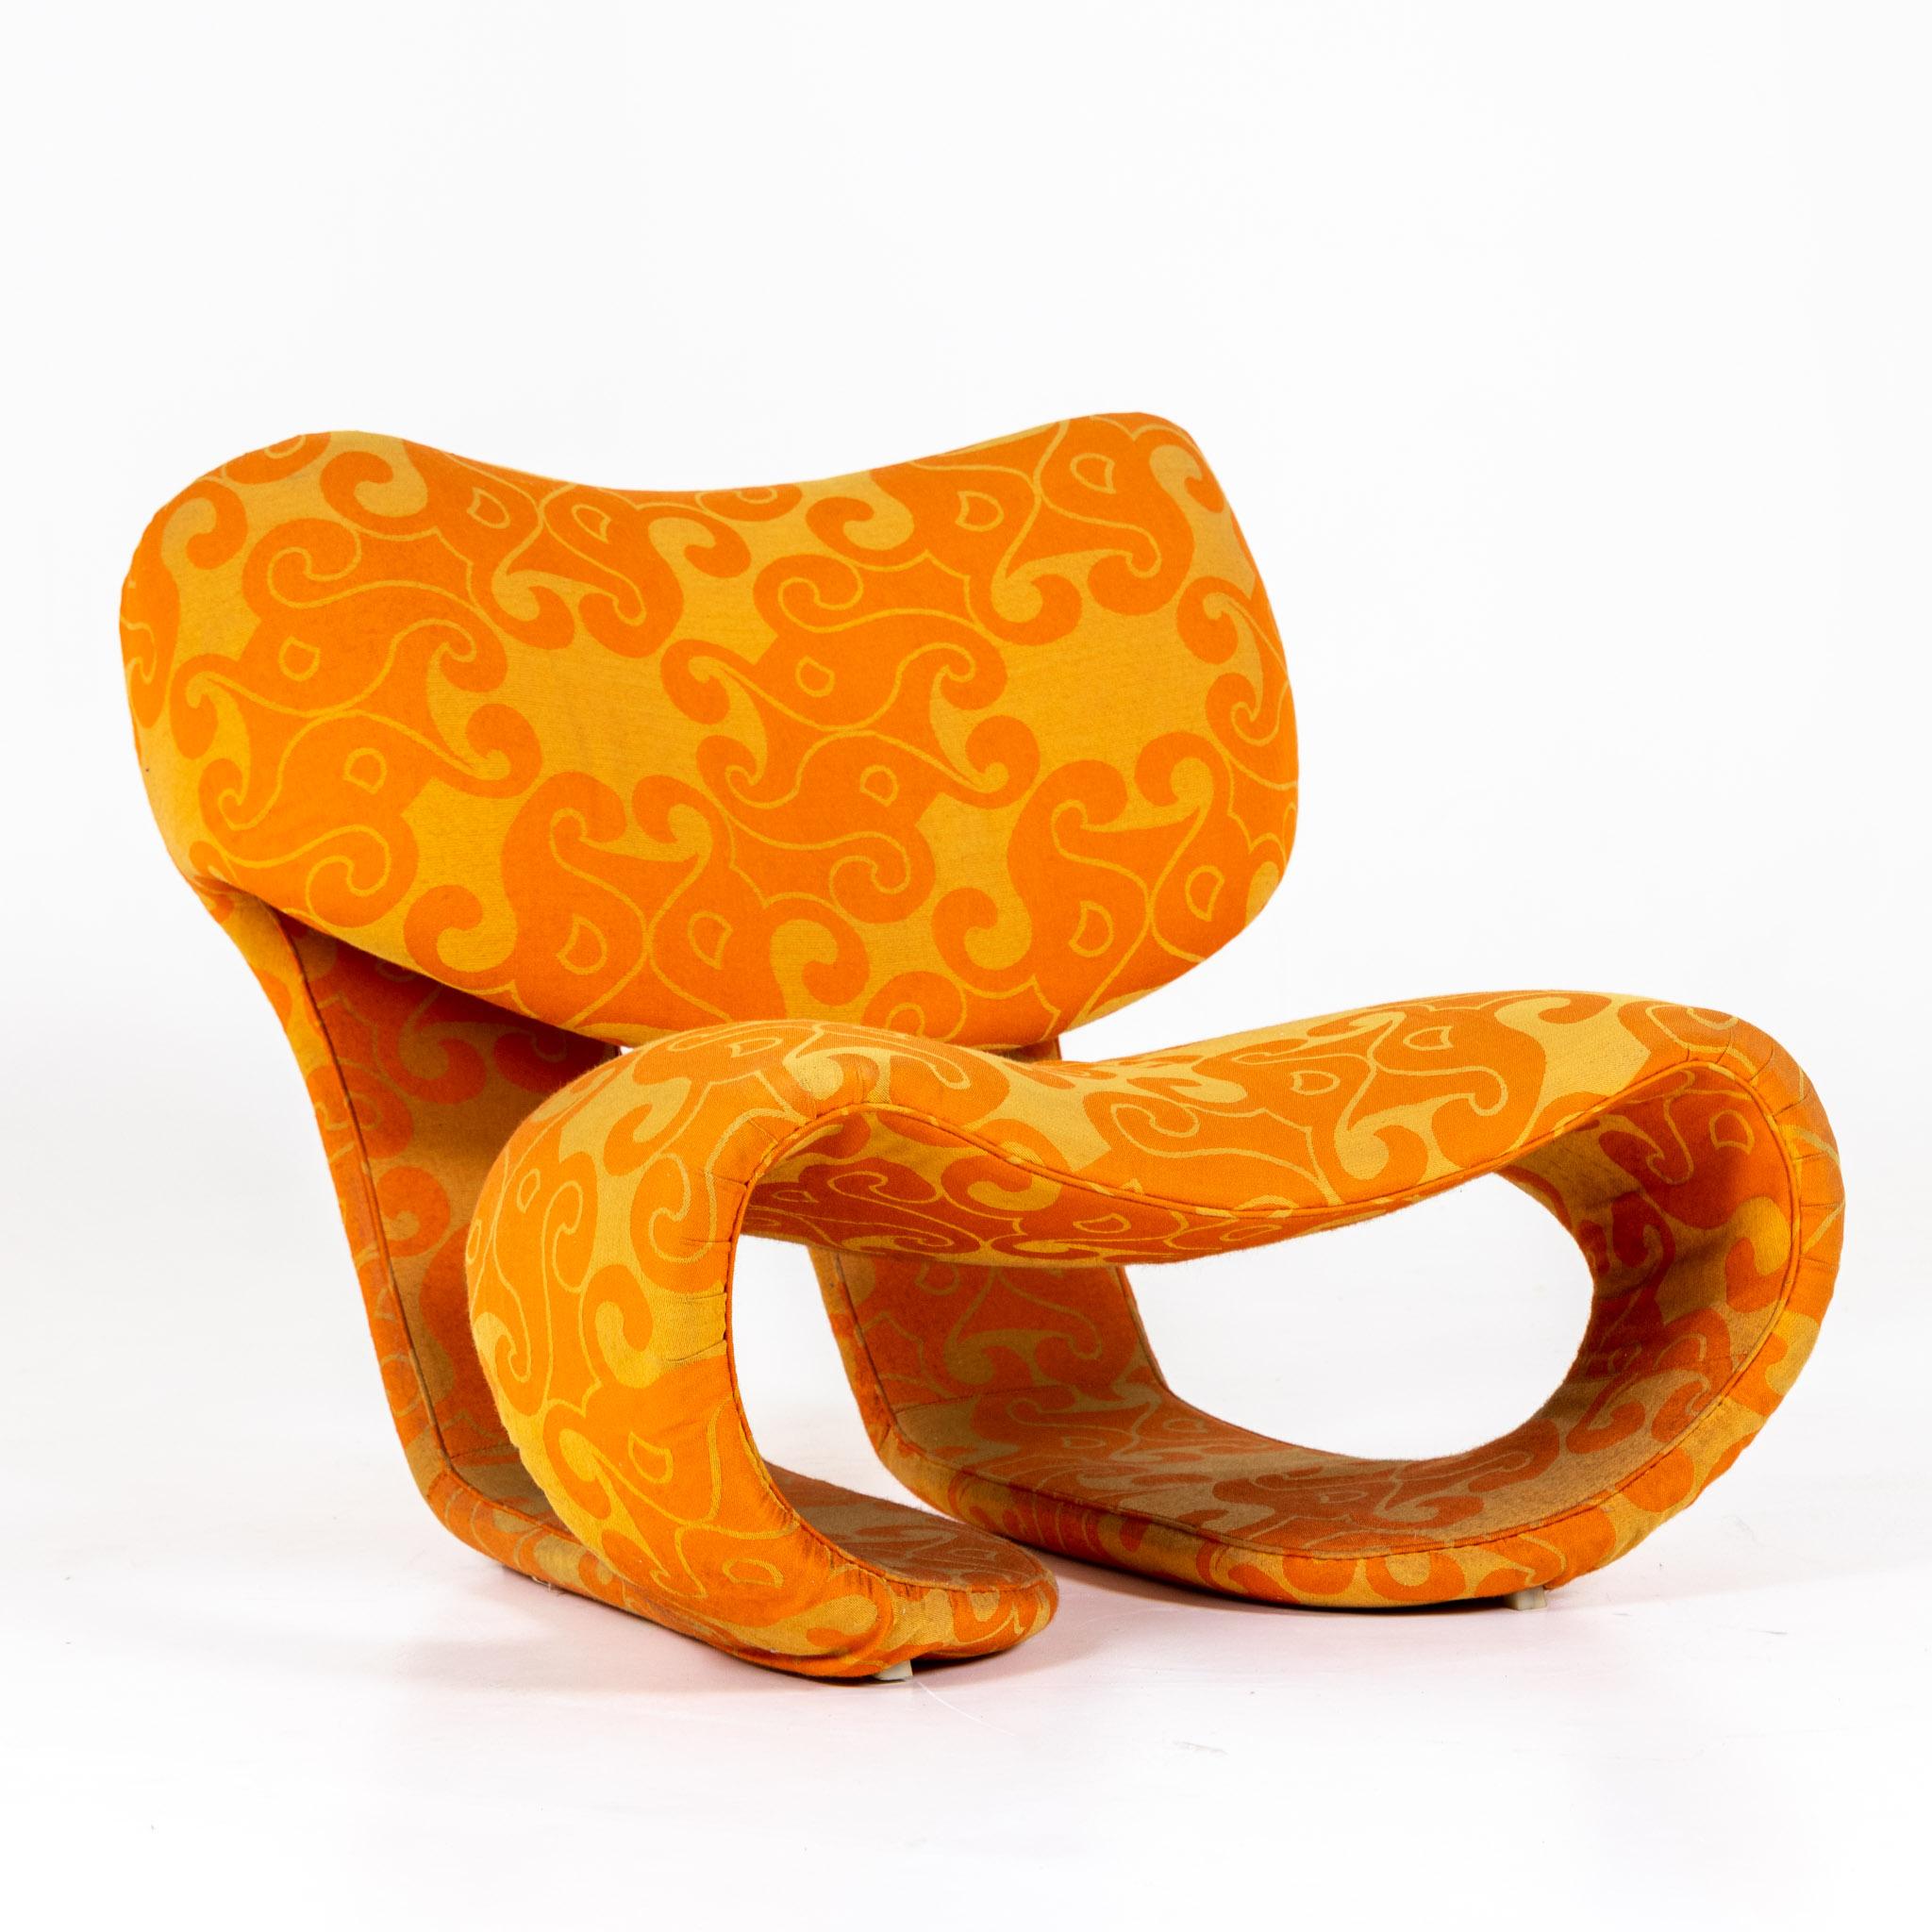 Rare Scultura 190 lounge chair. 
Designed by Vittorio Introini for Saporiti.
Still in its original upholstery.